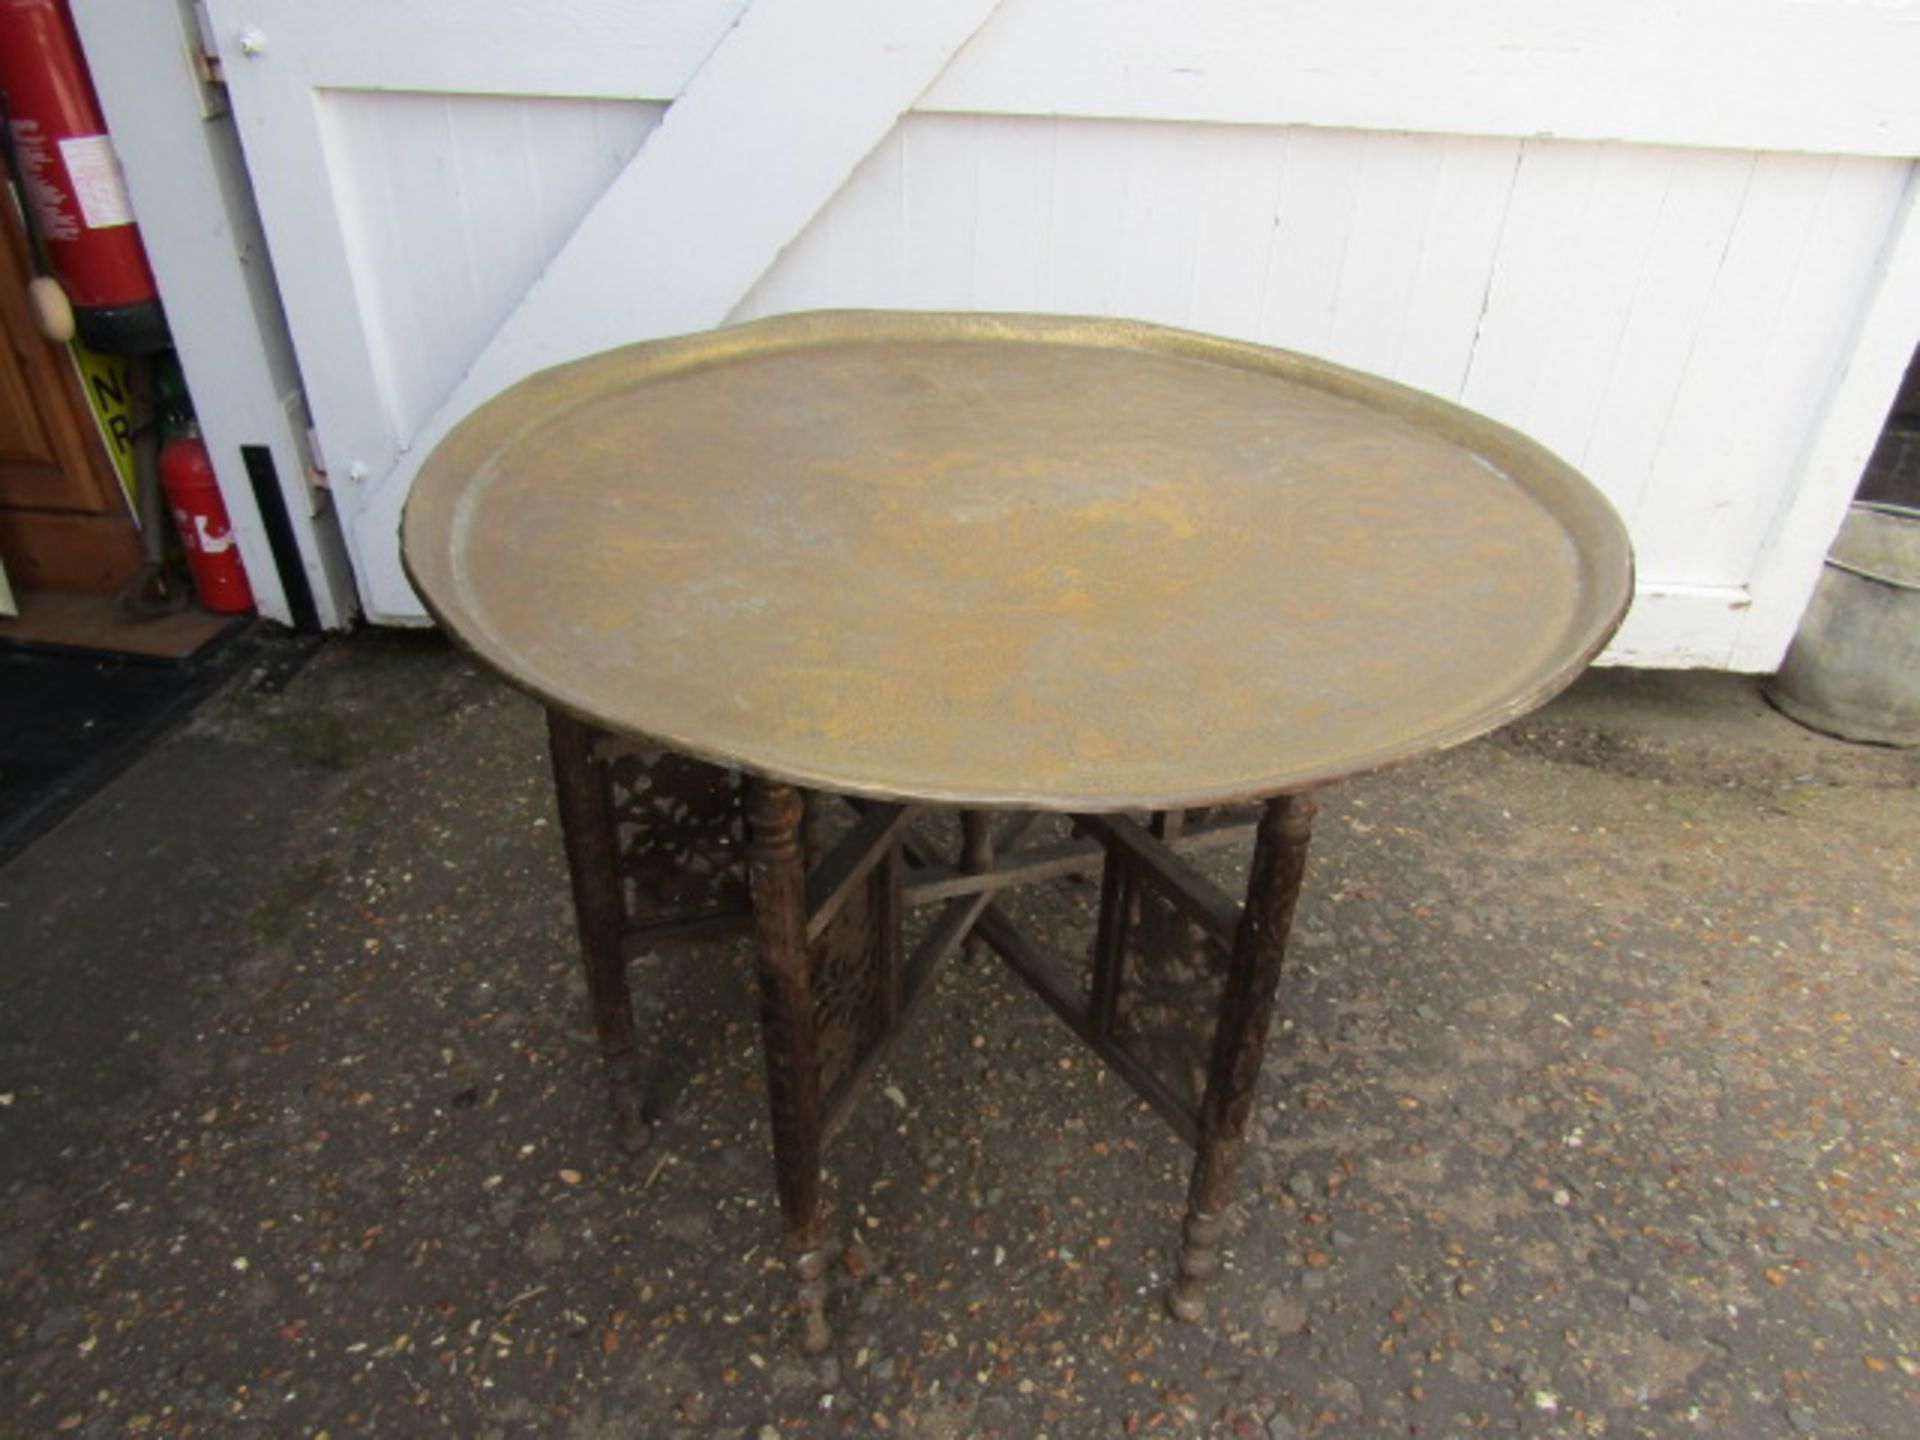 Eastern moorish table with brass tray top 85cmD 61cmH